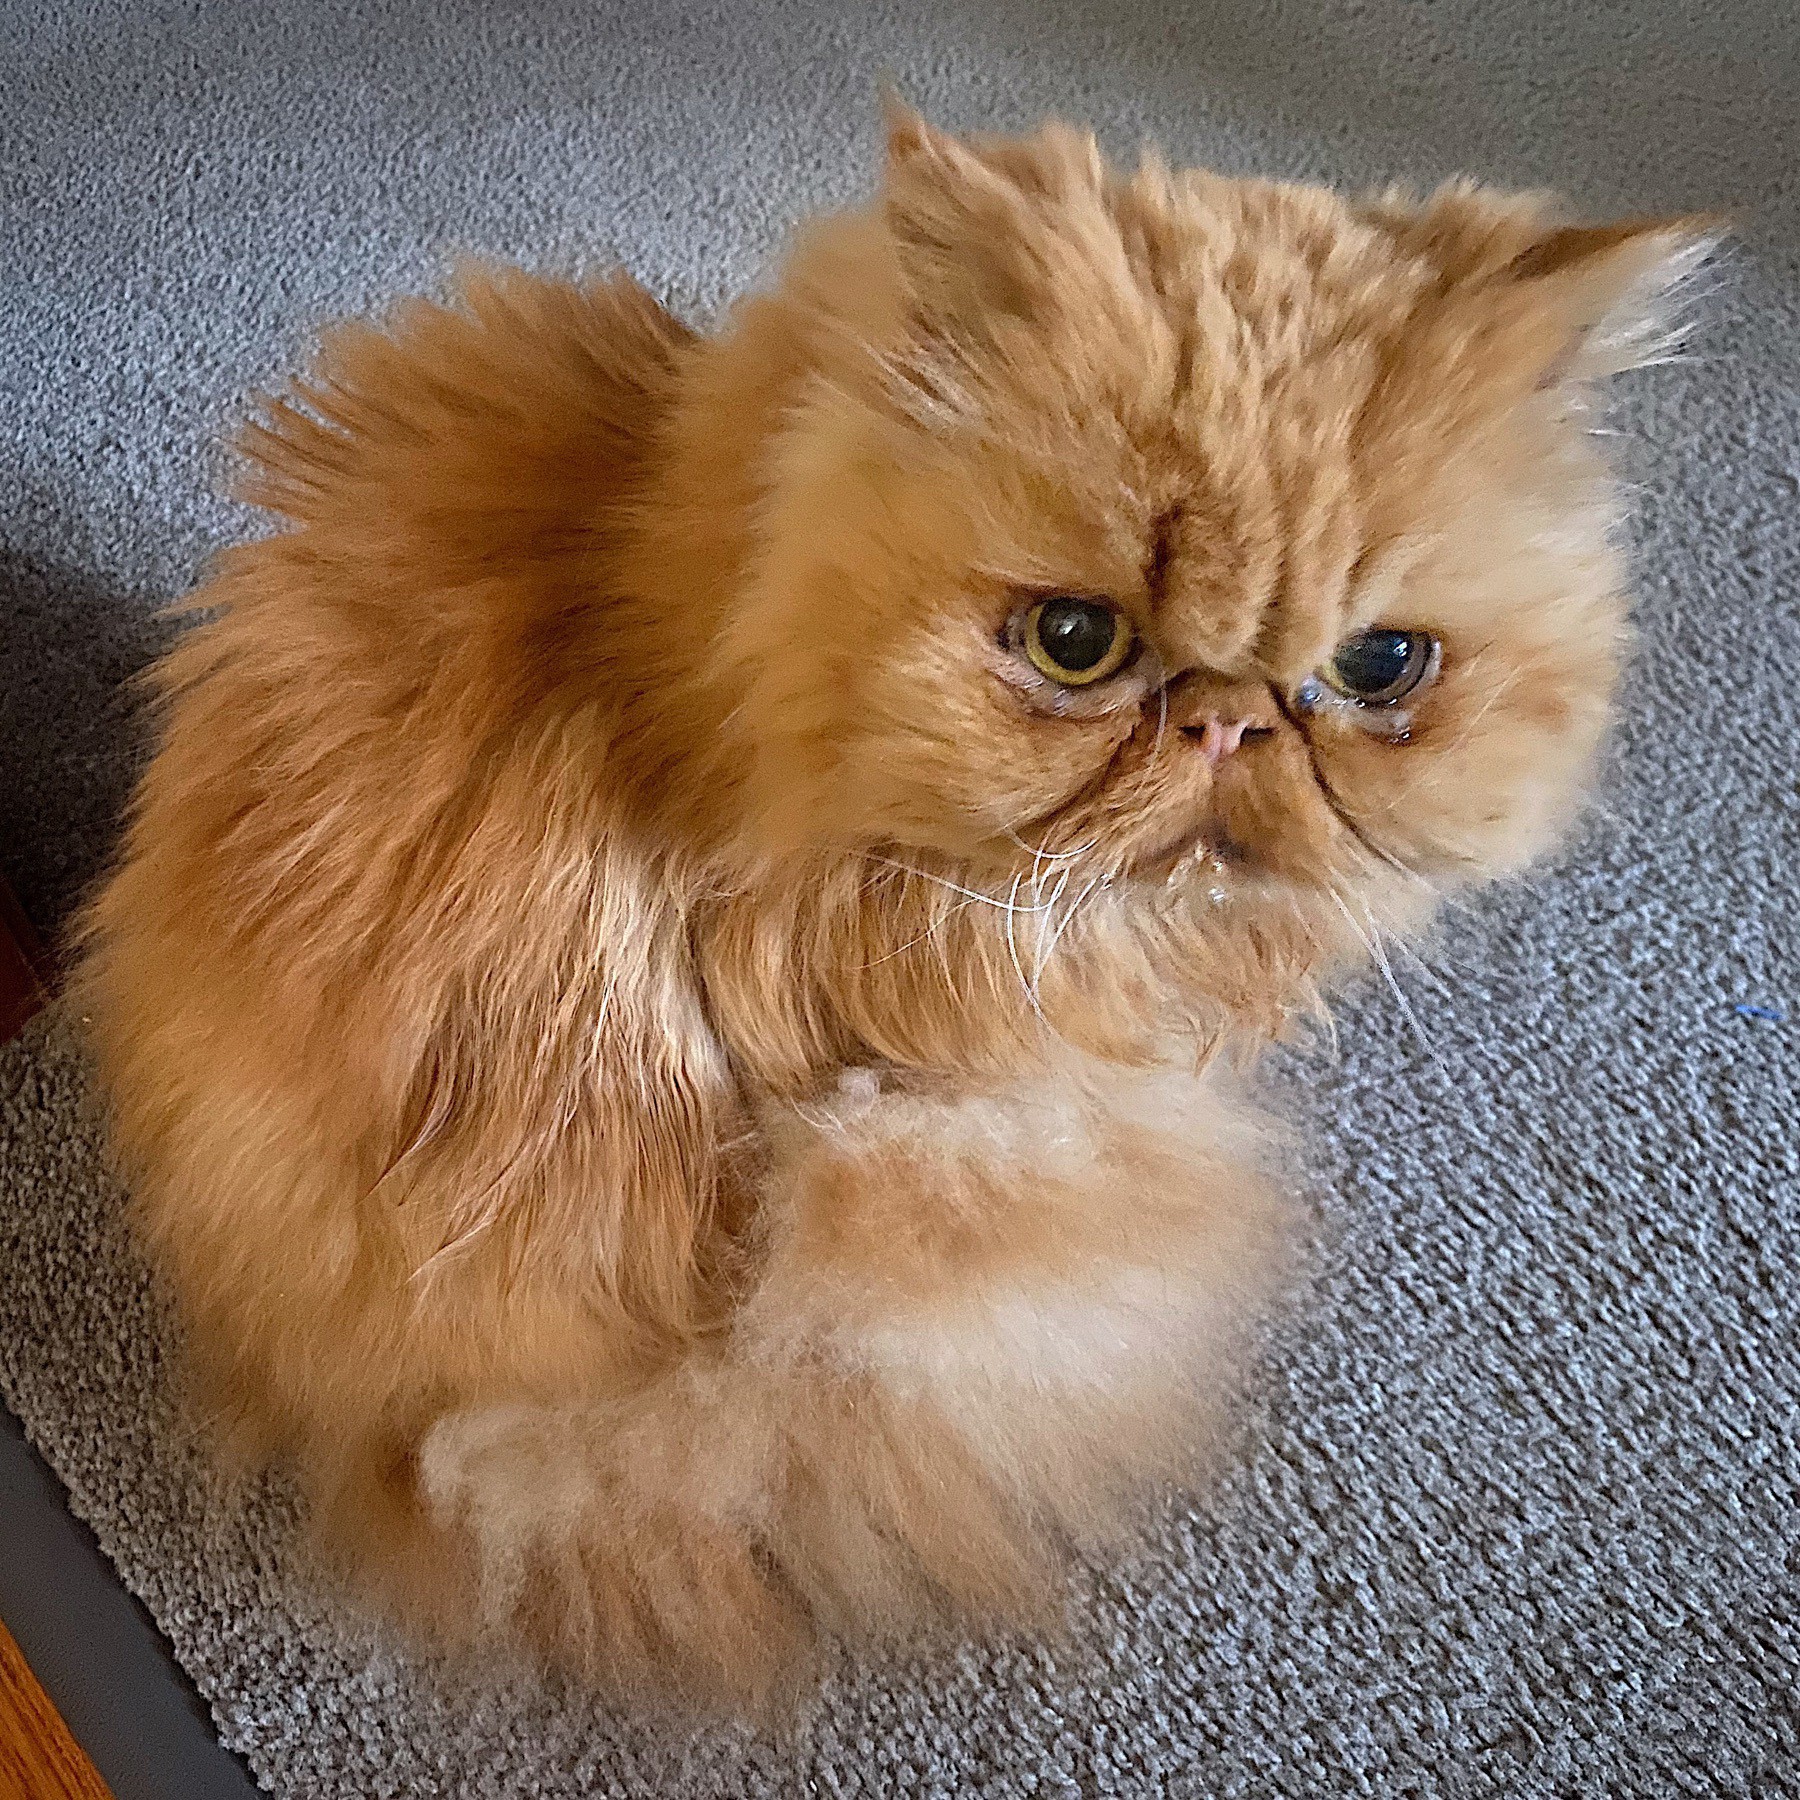 Cat sitting on carpet.